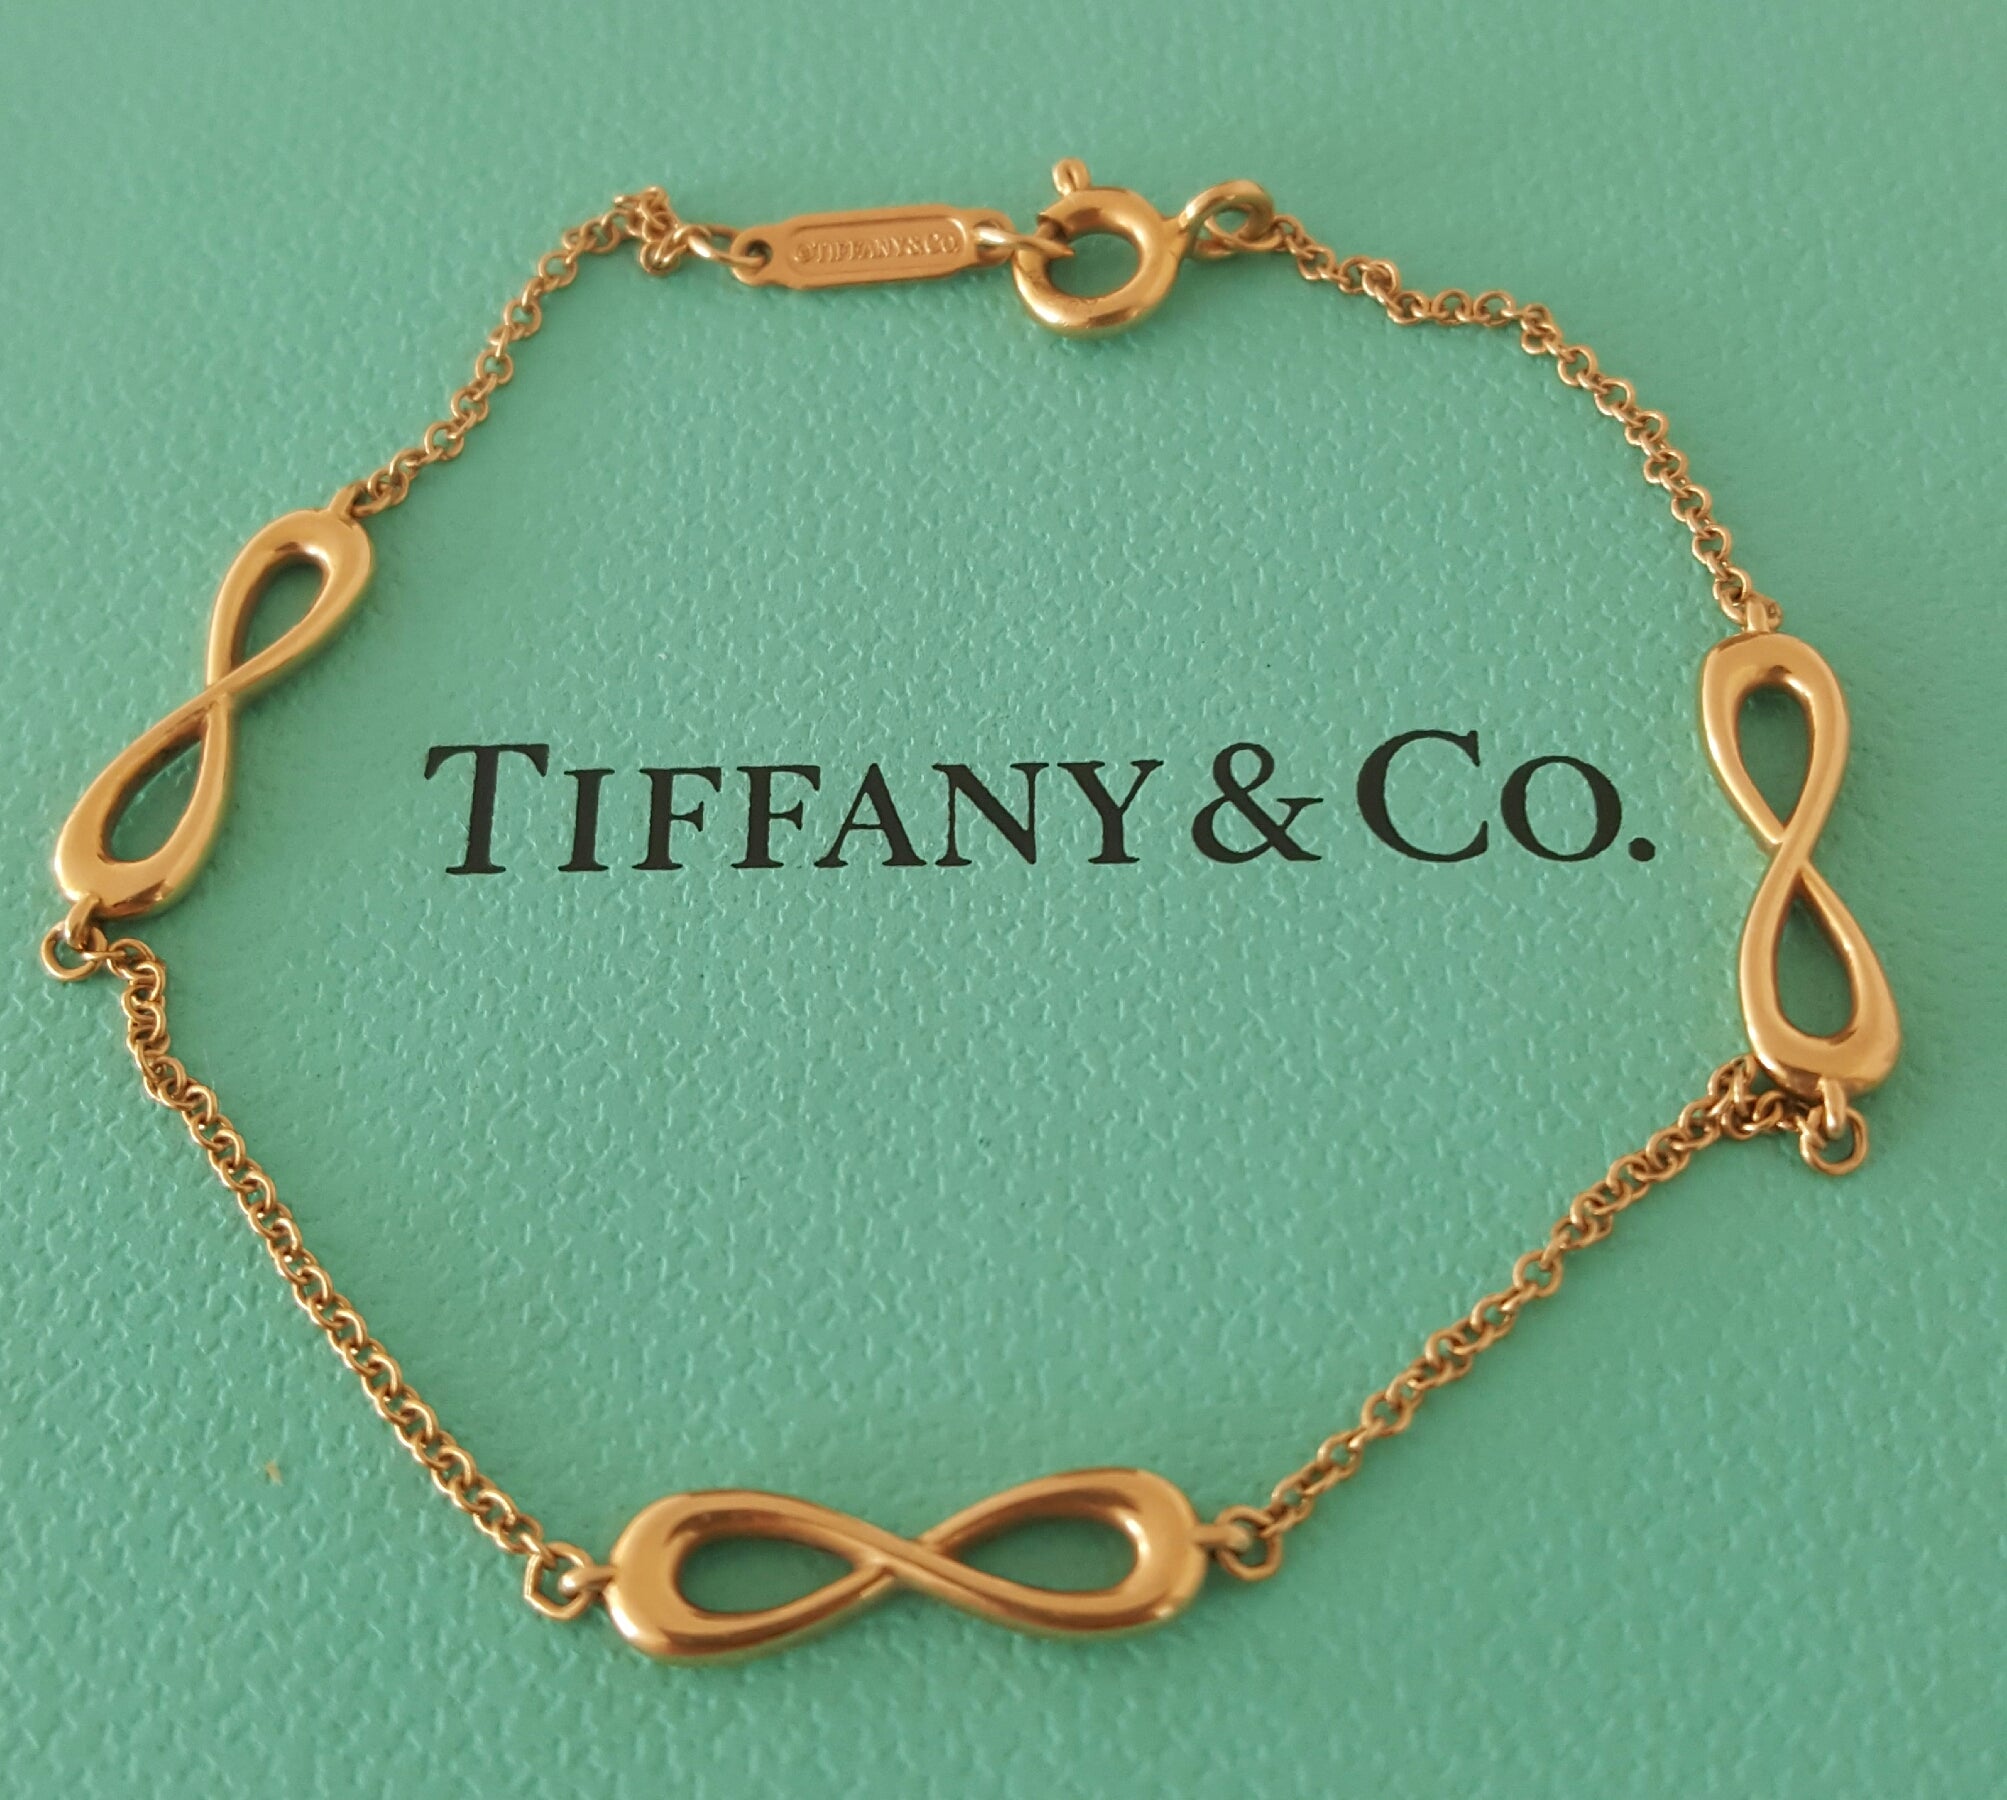 tiffany & co infinity bracelet price